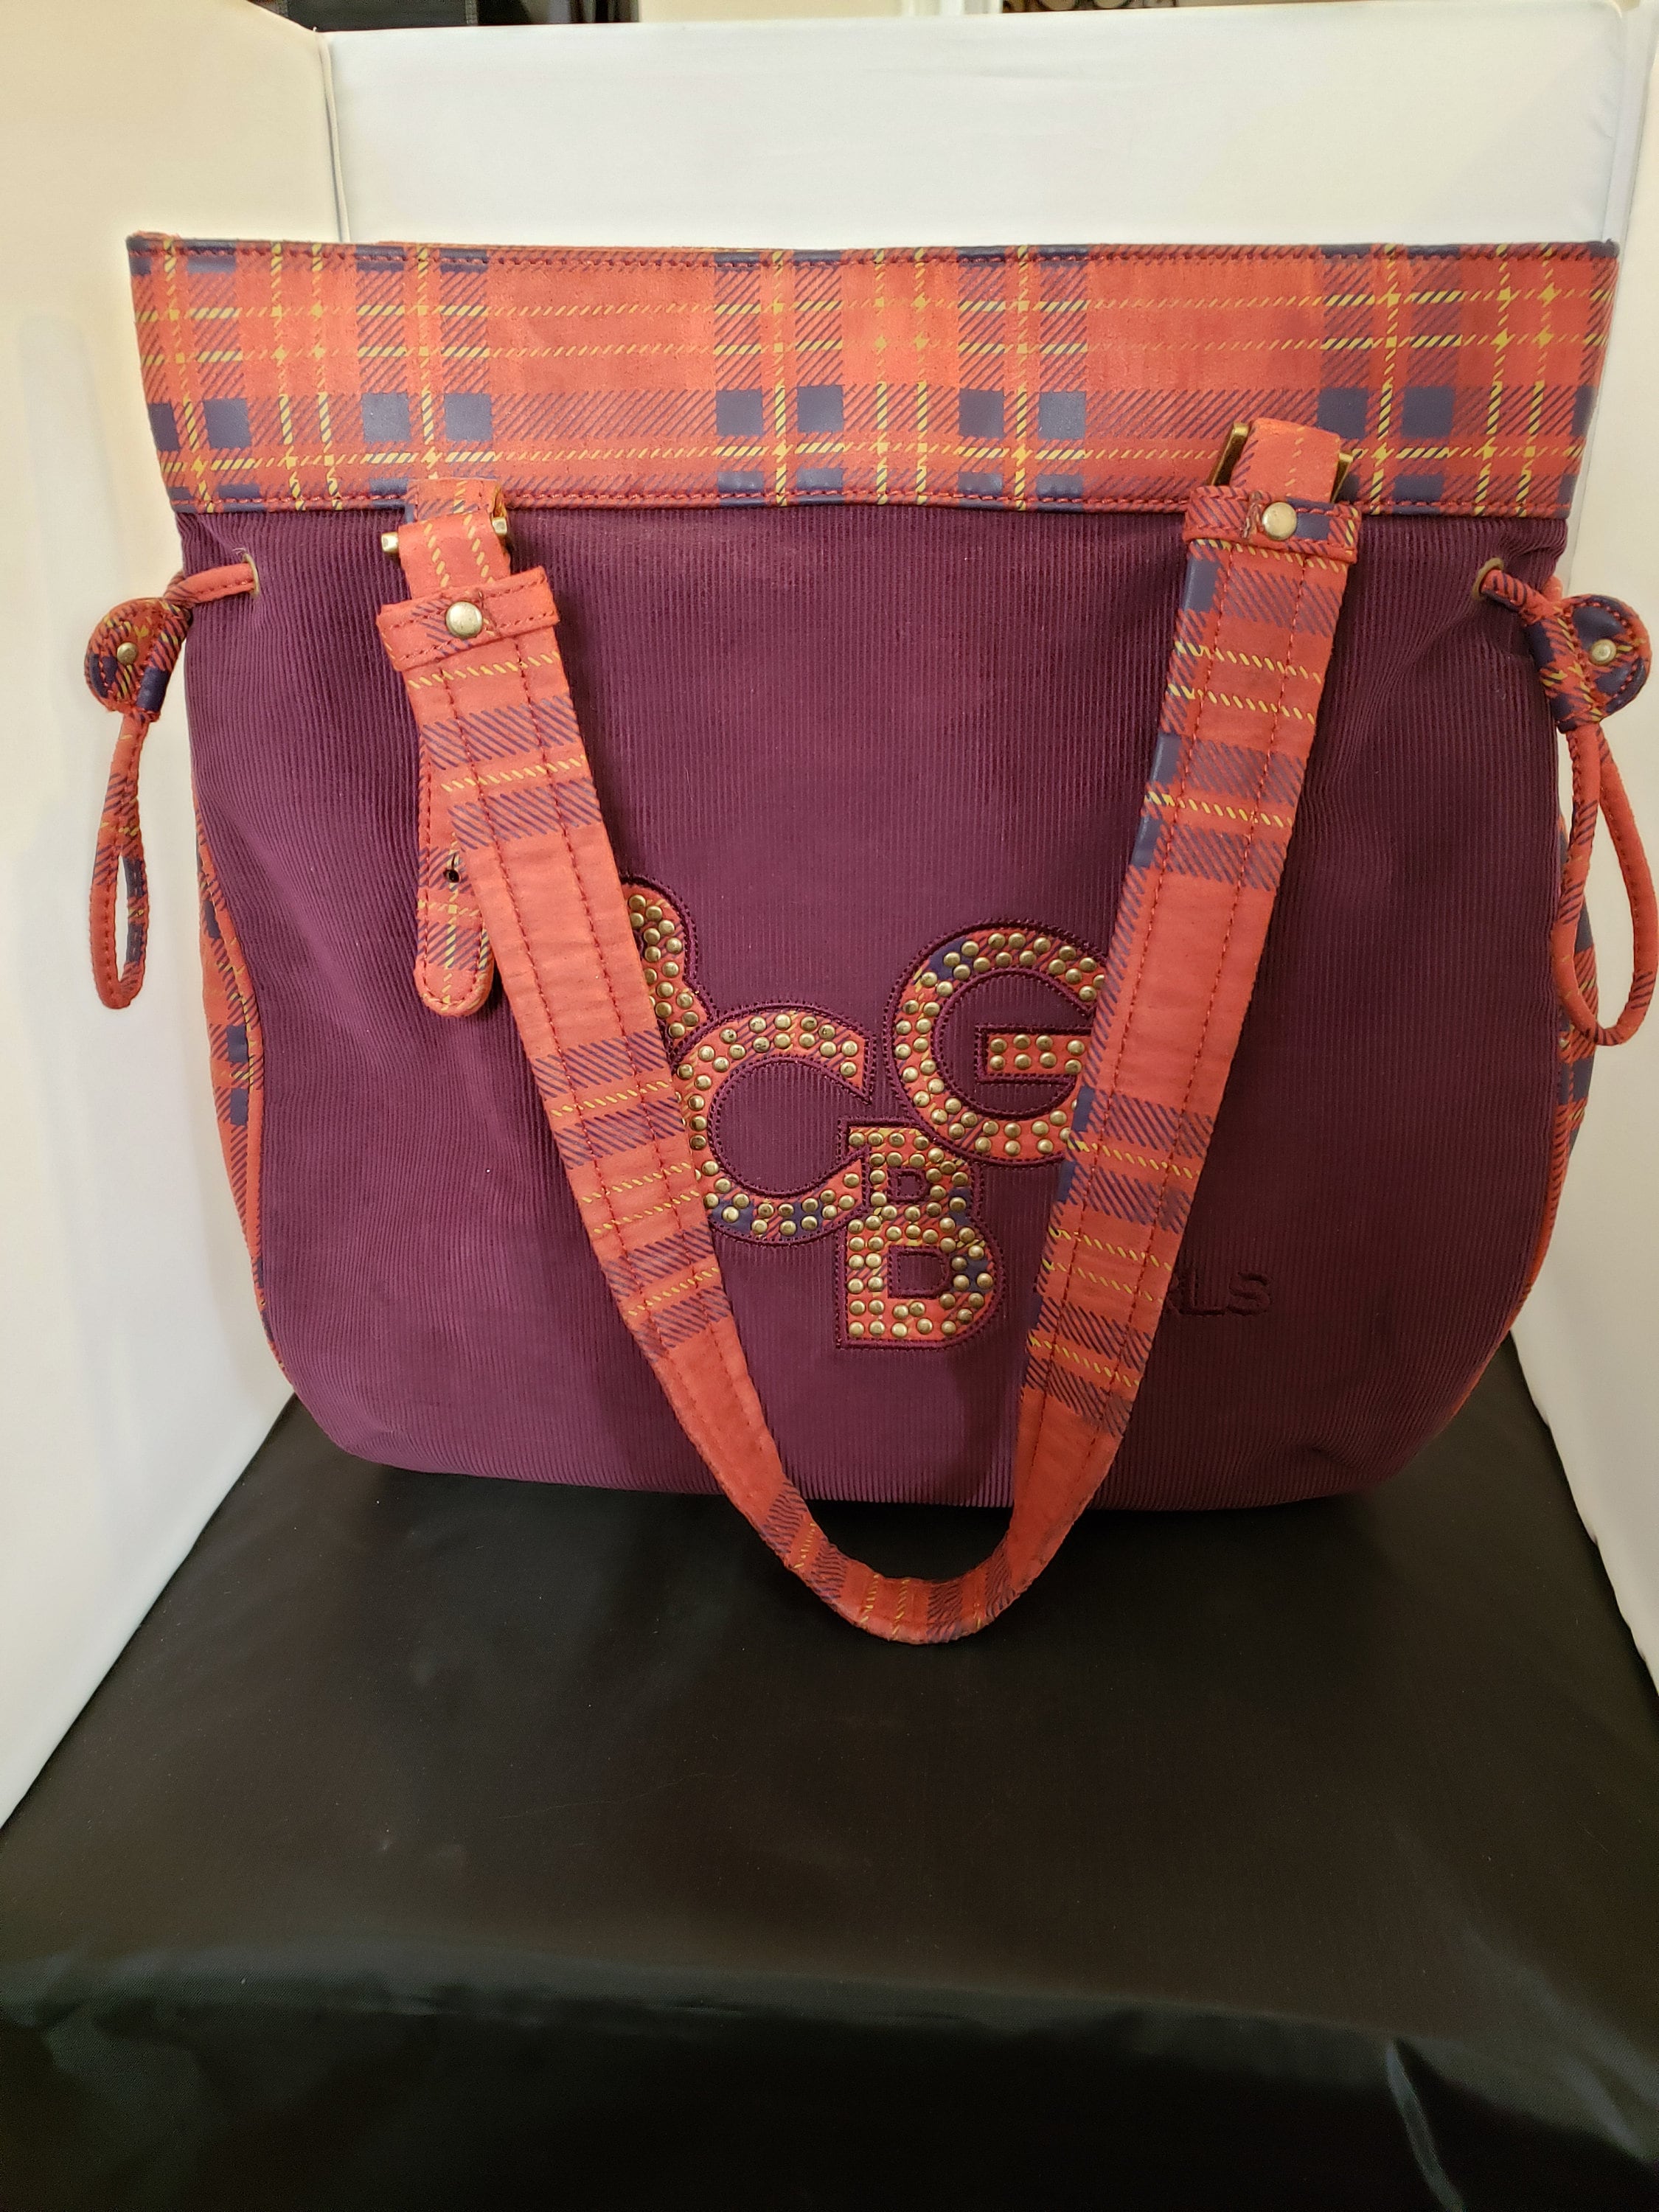 Purple Skull Leather Bag Handbag Purse for Women Fashion Small Casual Tote  Luxury Shoulder Messenger Bolsa Female Top-handle Sac - AliExpress